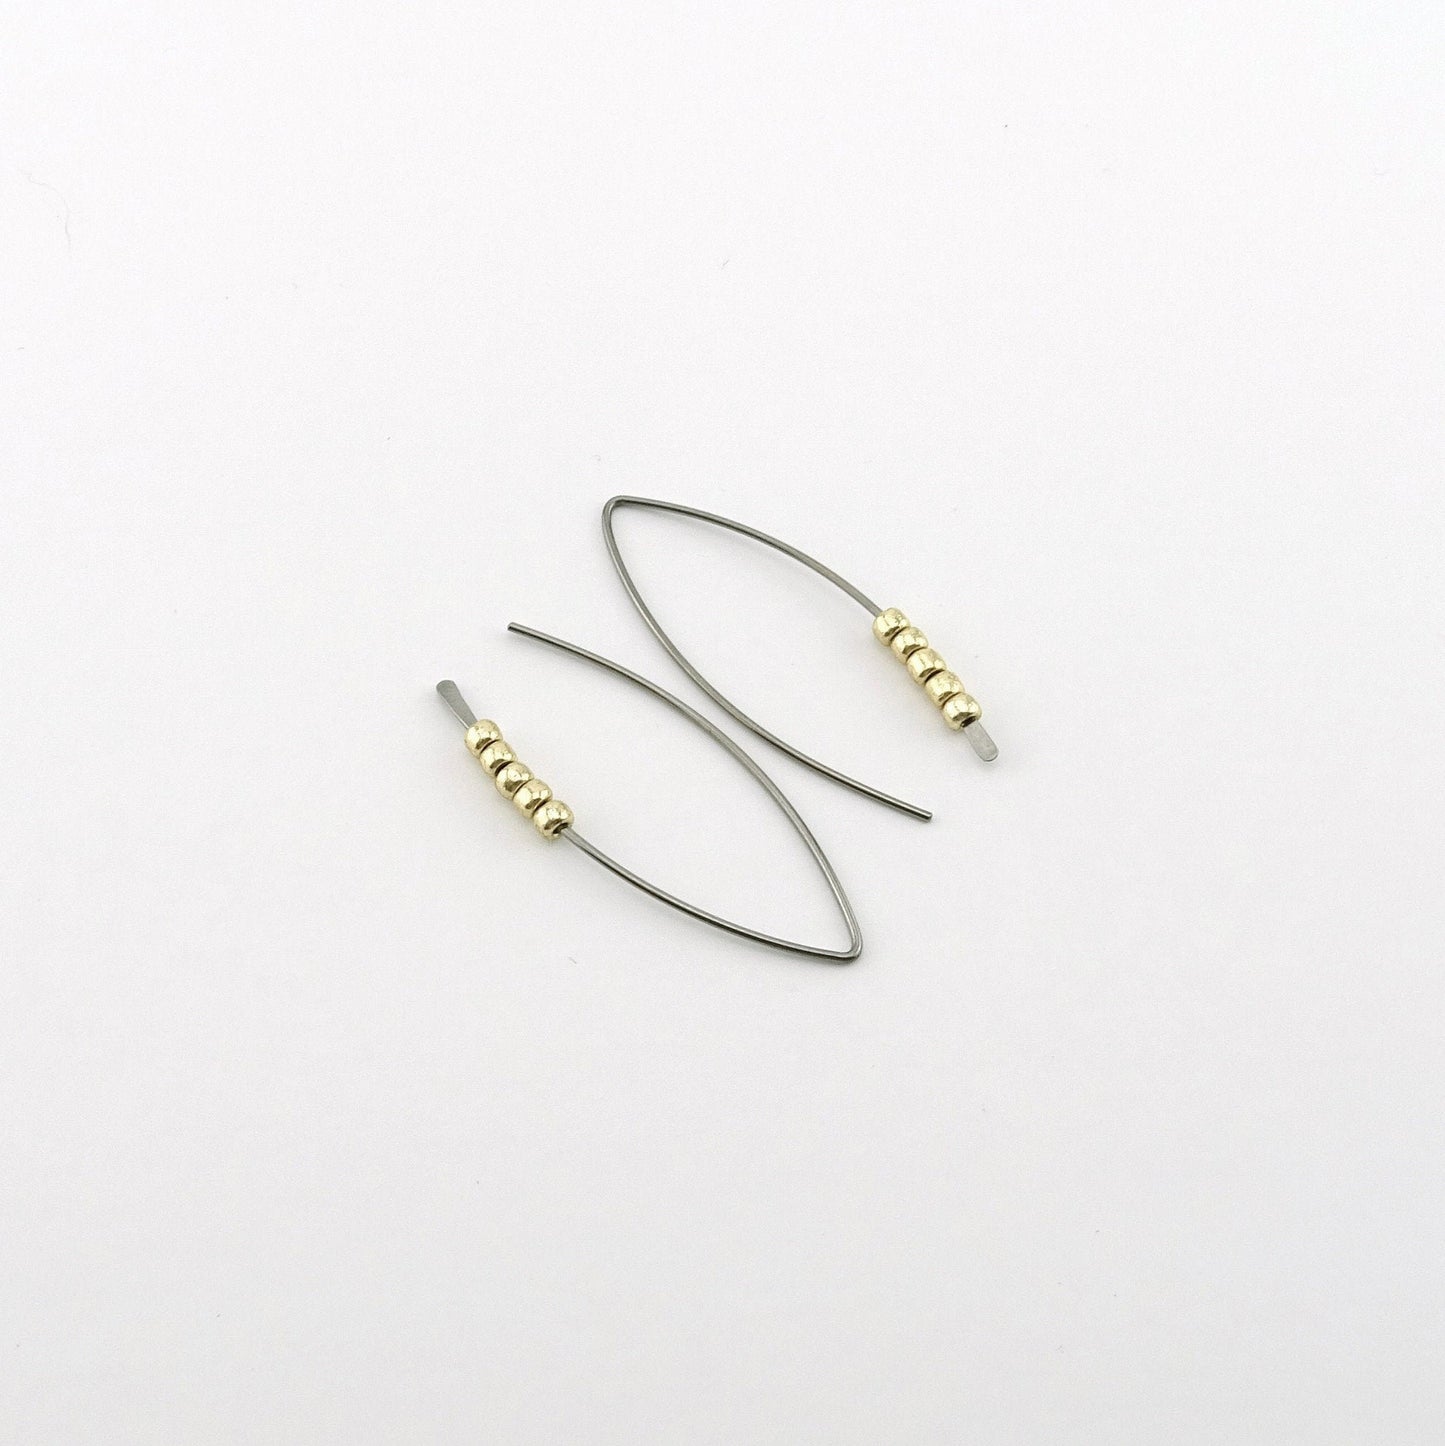 Gold Beaded Niobium Wishbone Threader Earrings, Nickel Free Tiny Gold Beads Threaders, Hypoallergenic Sliders for Sensitive Ears